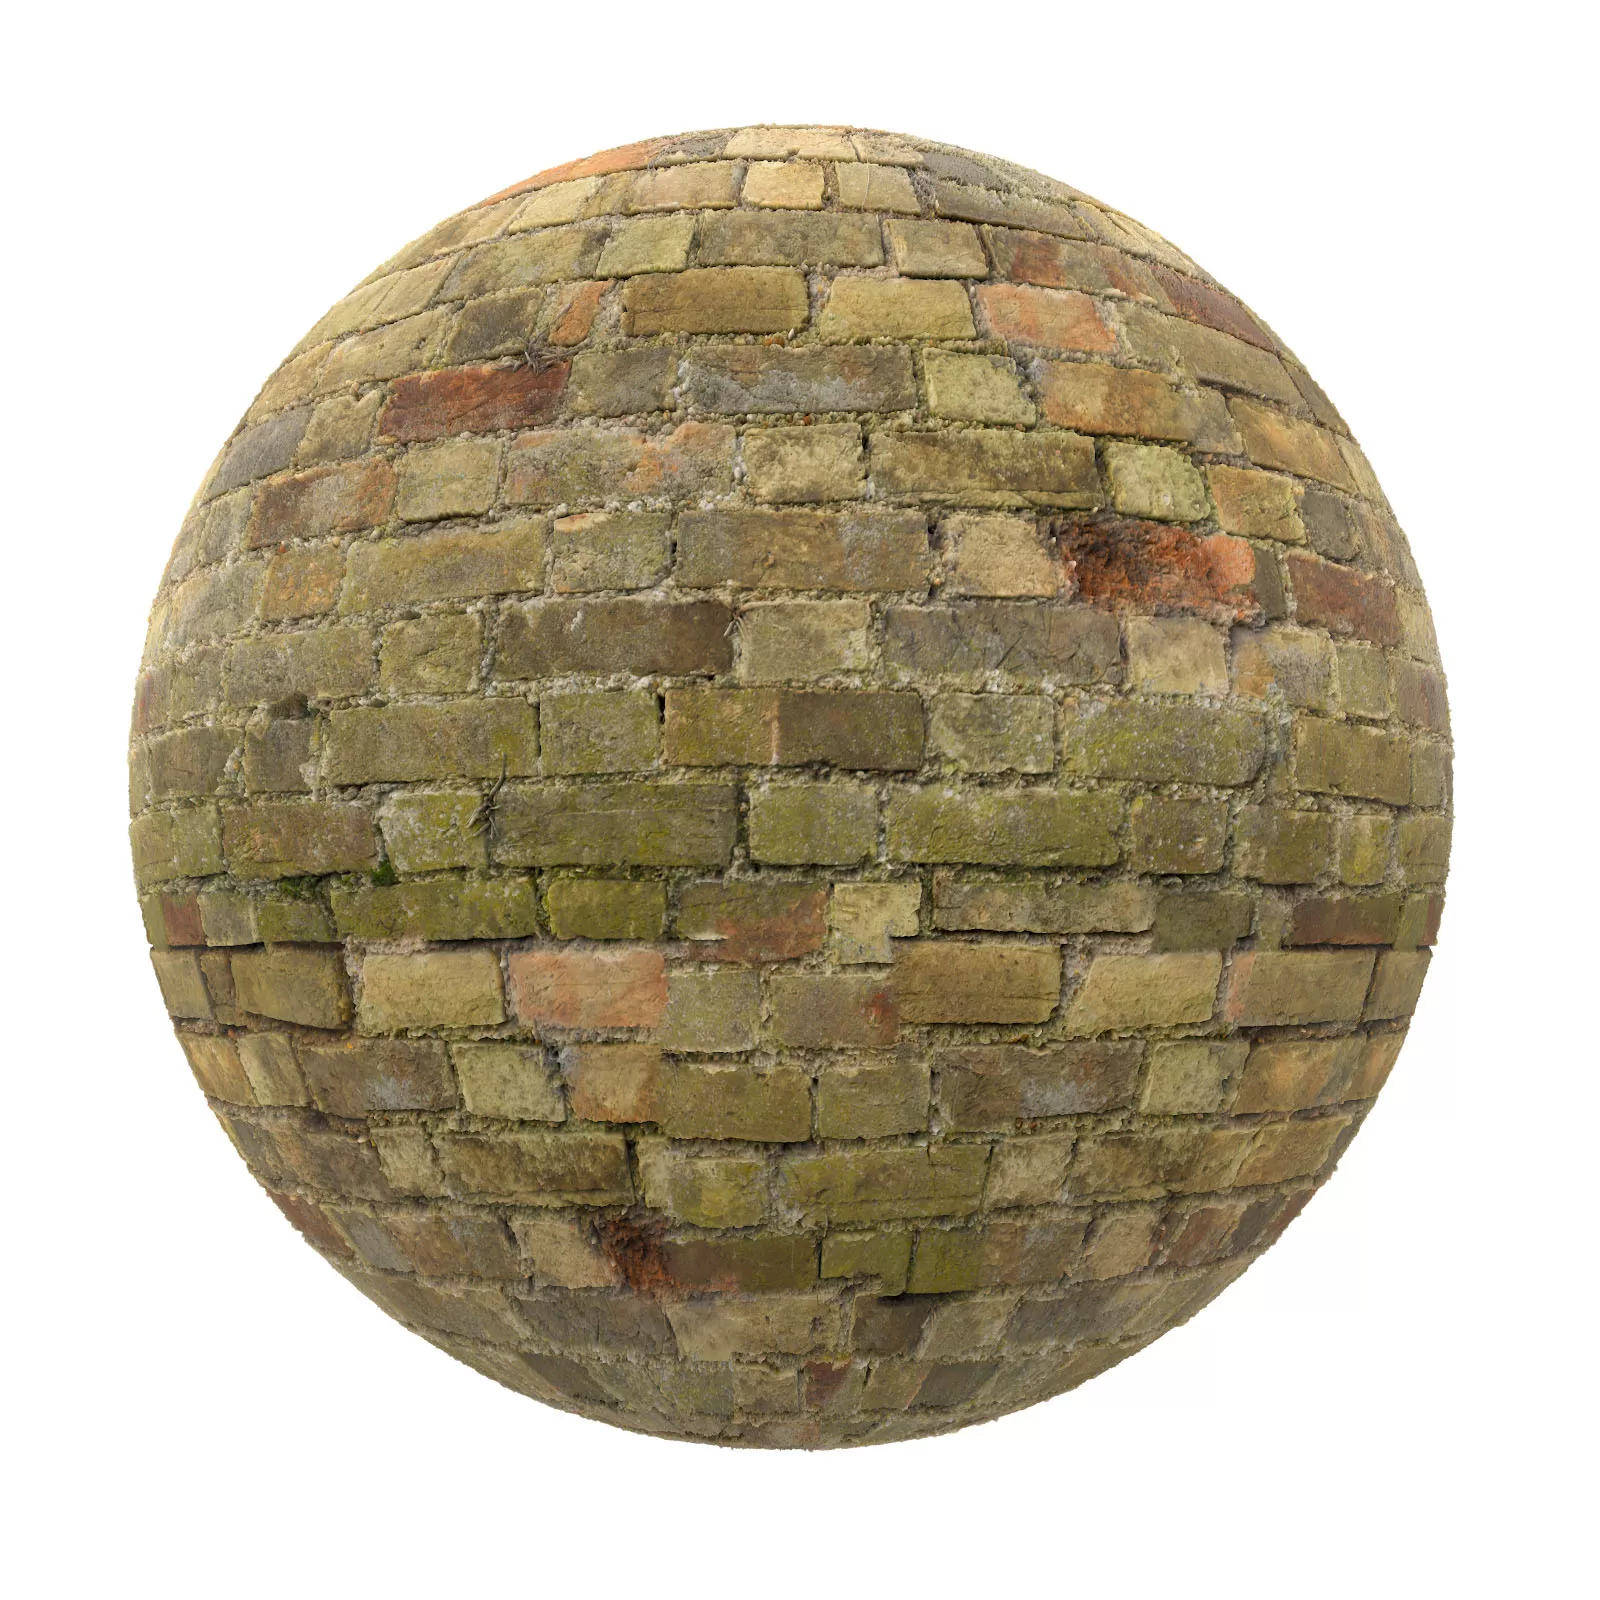 PBR CGAXIS TEXTURES – BRICK – Stone Brick Wall 8